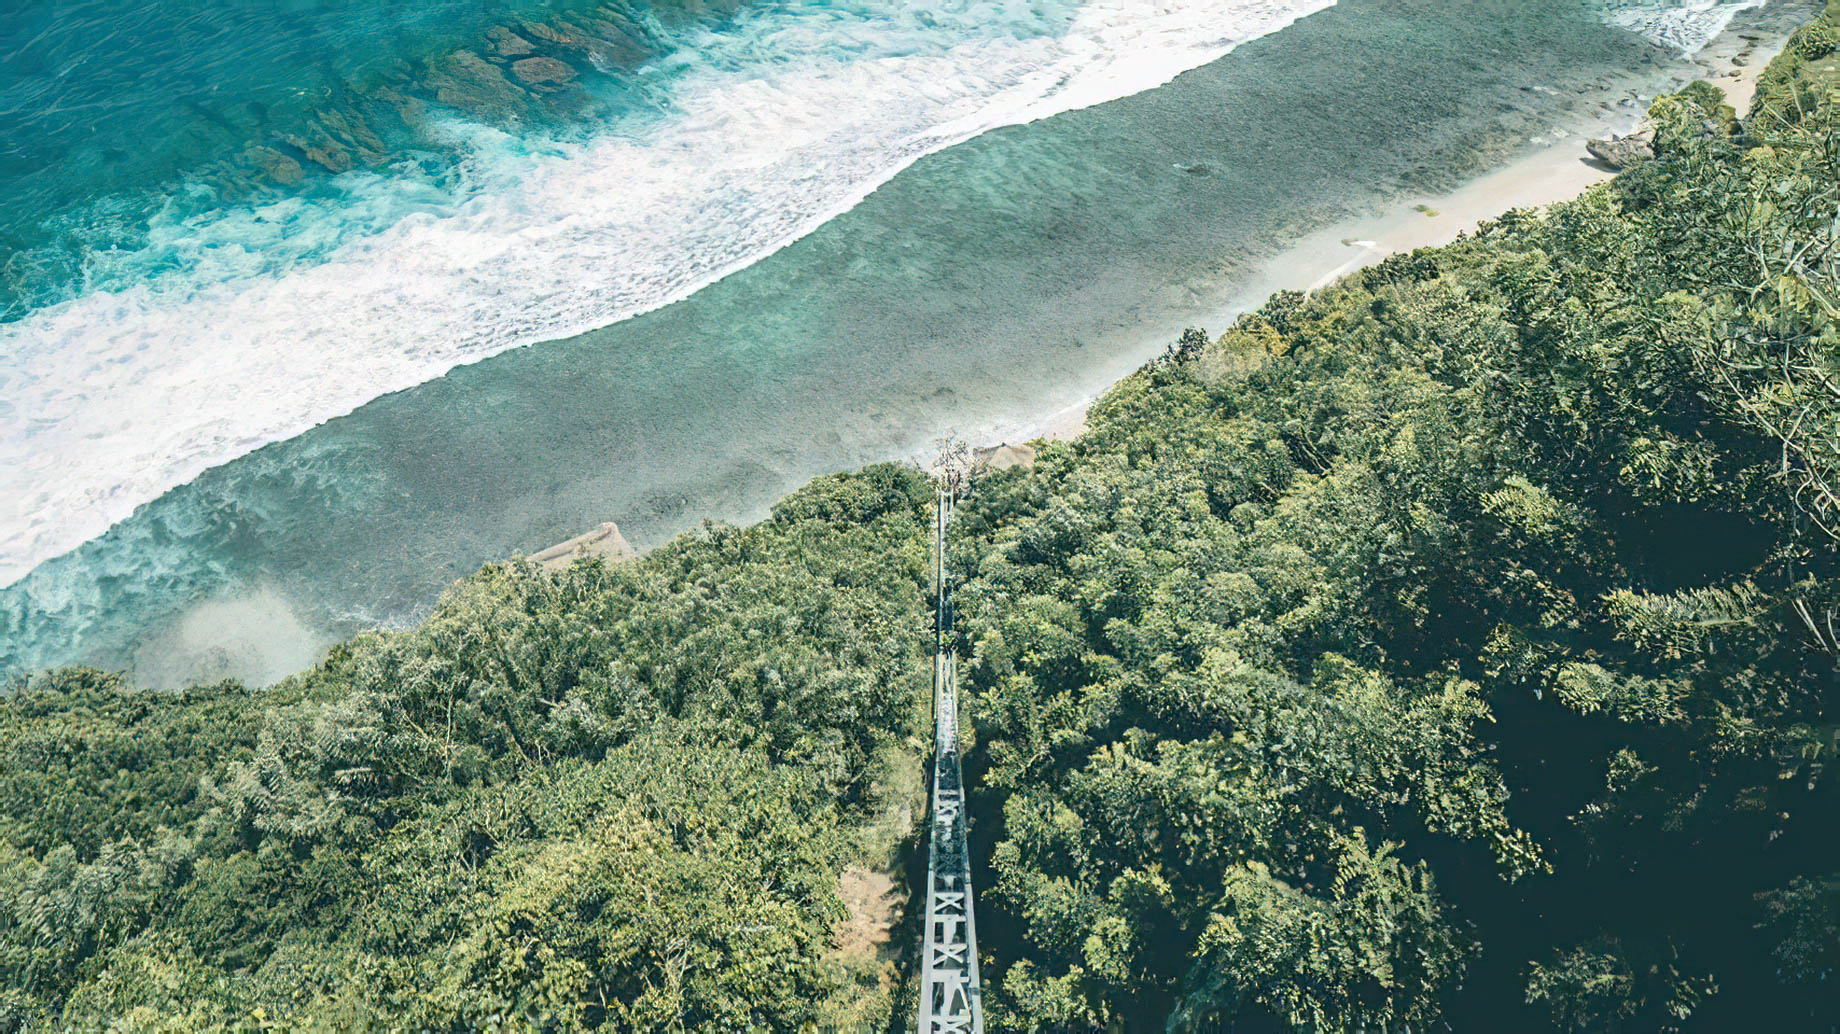 Bvlgari Resort Bali – Uluwatu, Bali, Indonesia – Inclined Elevator to the Beach